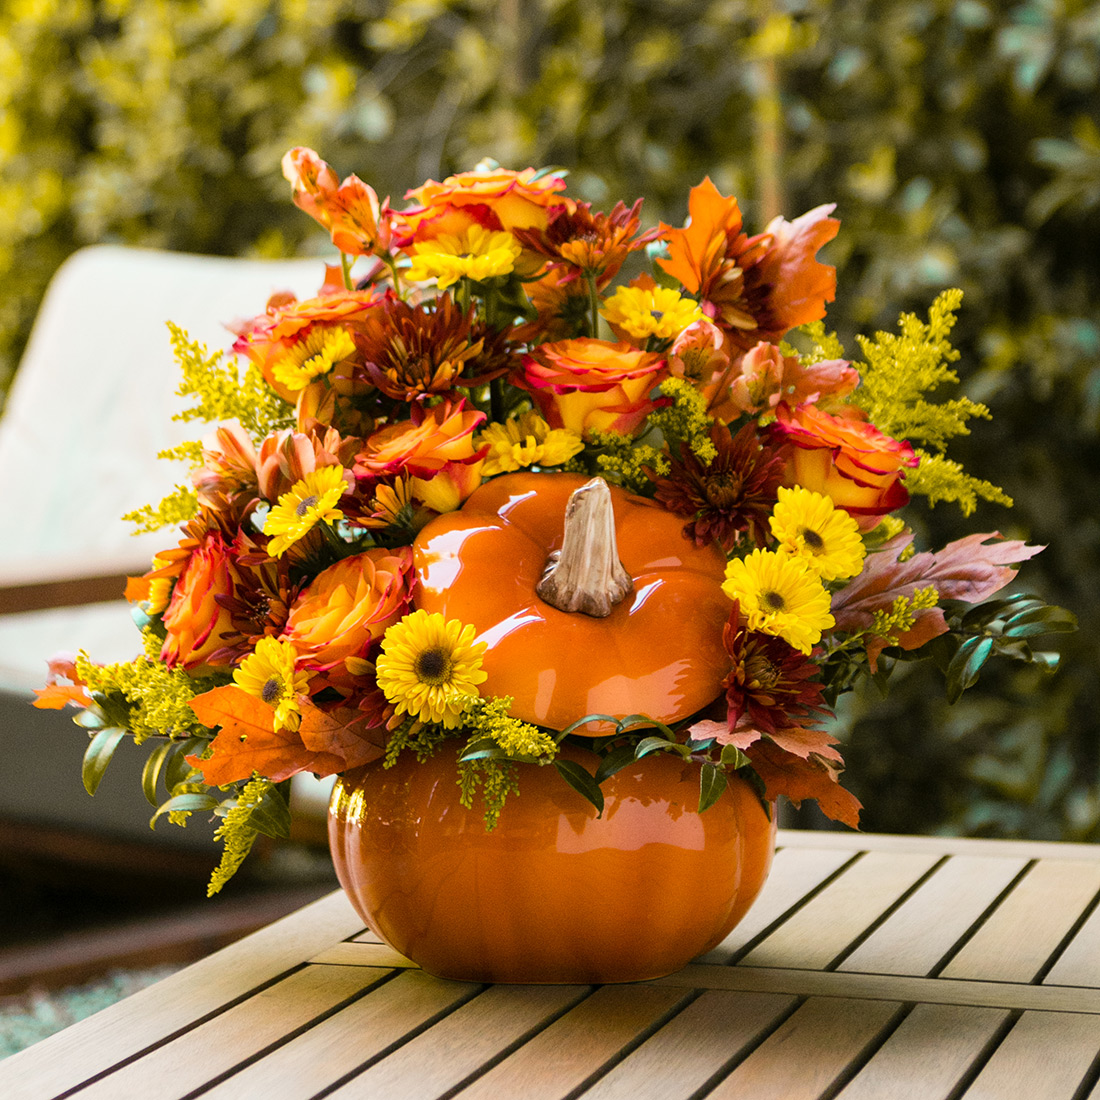 Gorgeous Fall Flowers that Bring October Inside | Teleflora Blog